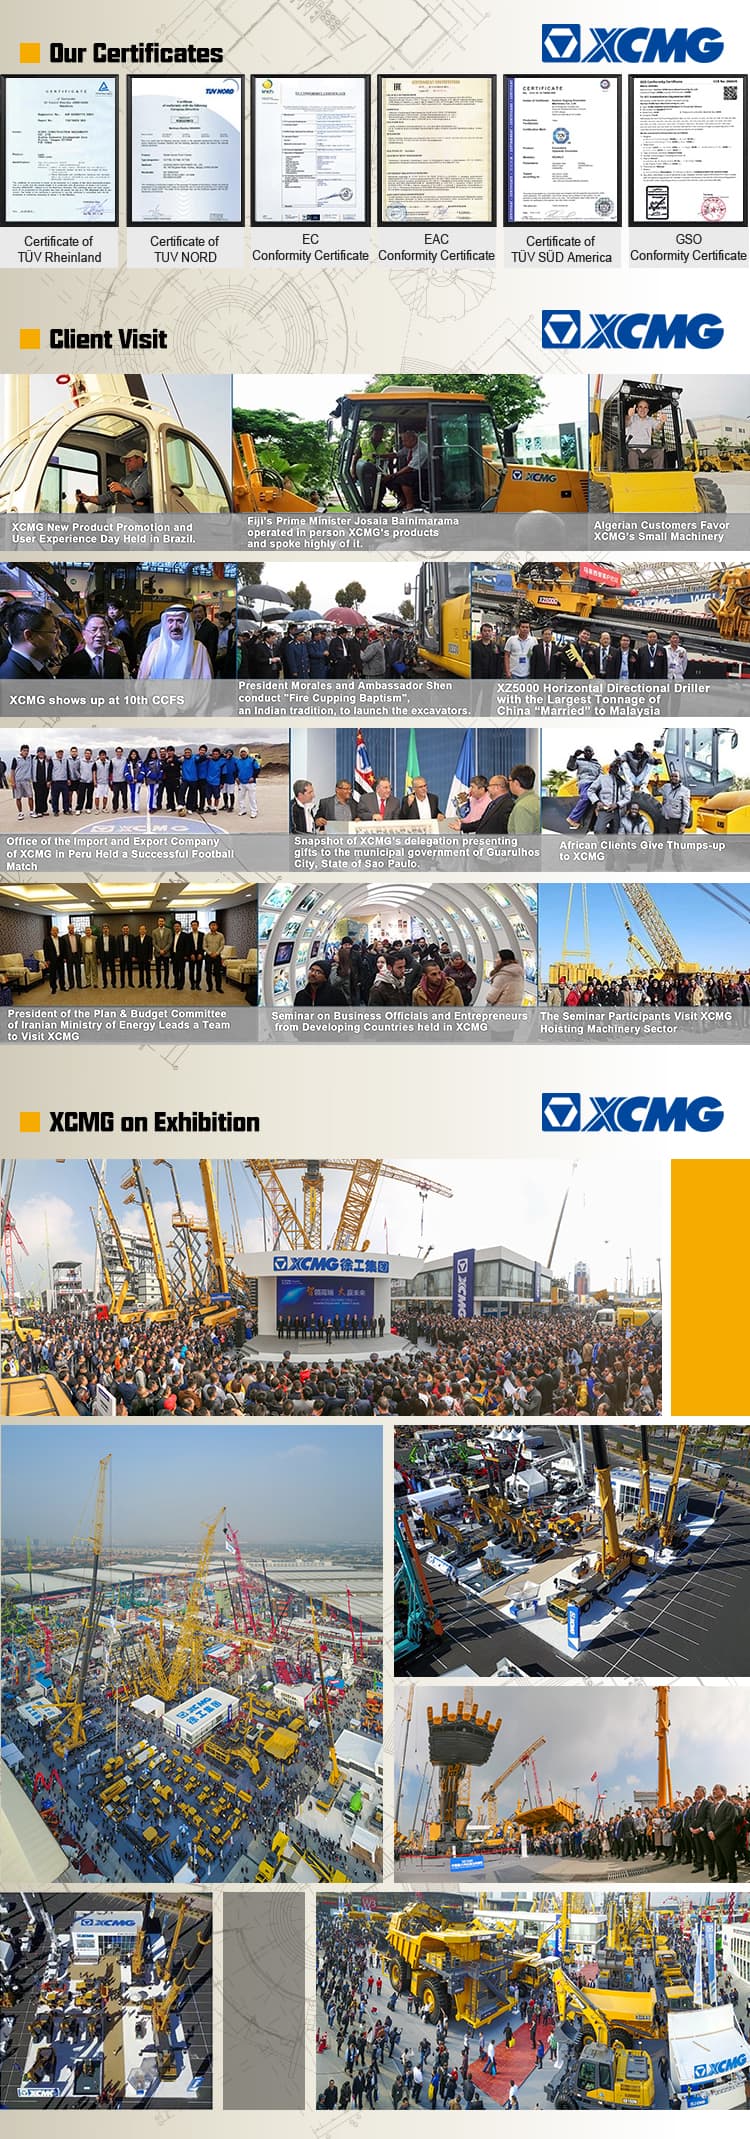 18m XCMG Large Load XGA18ACK Mobile Electrical Articulating Boom Lift